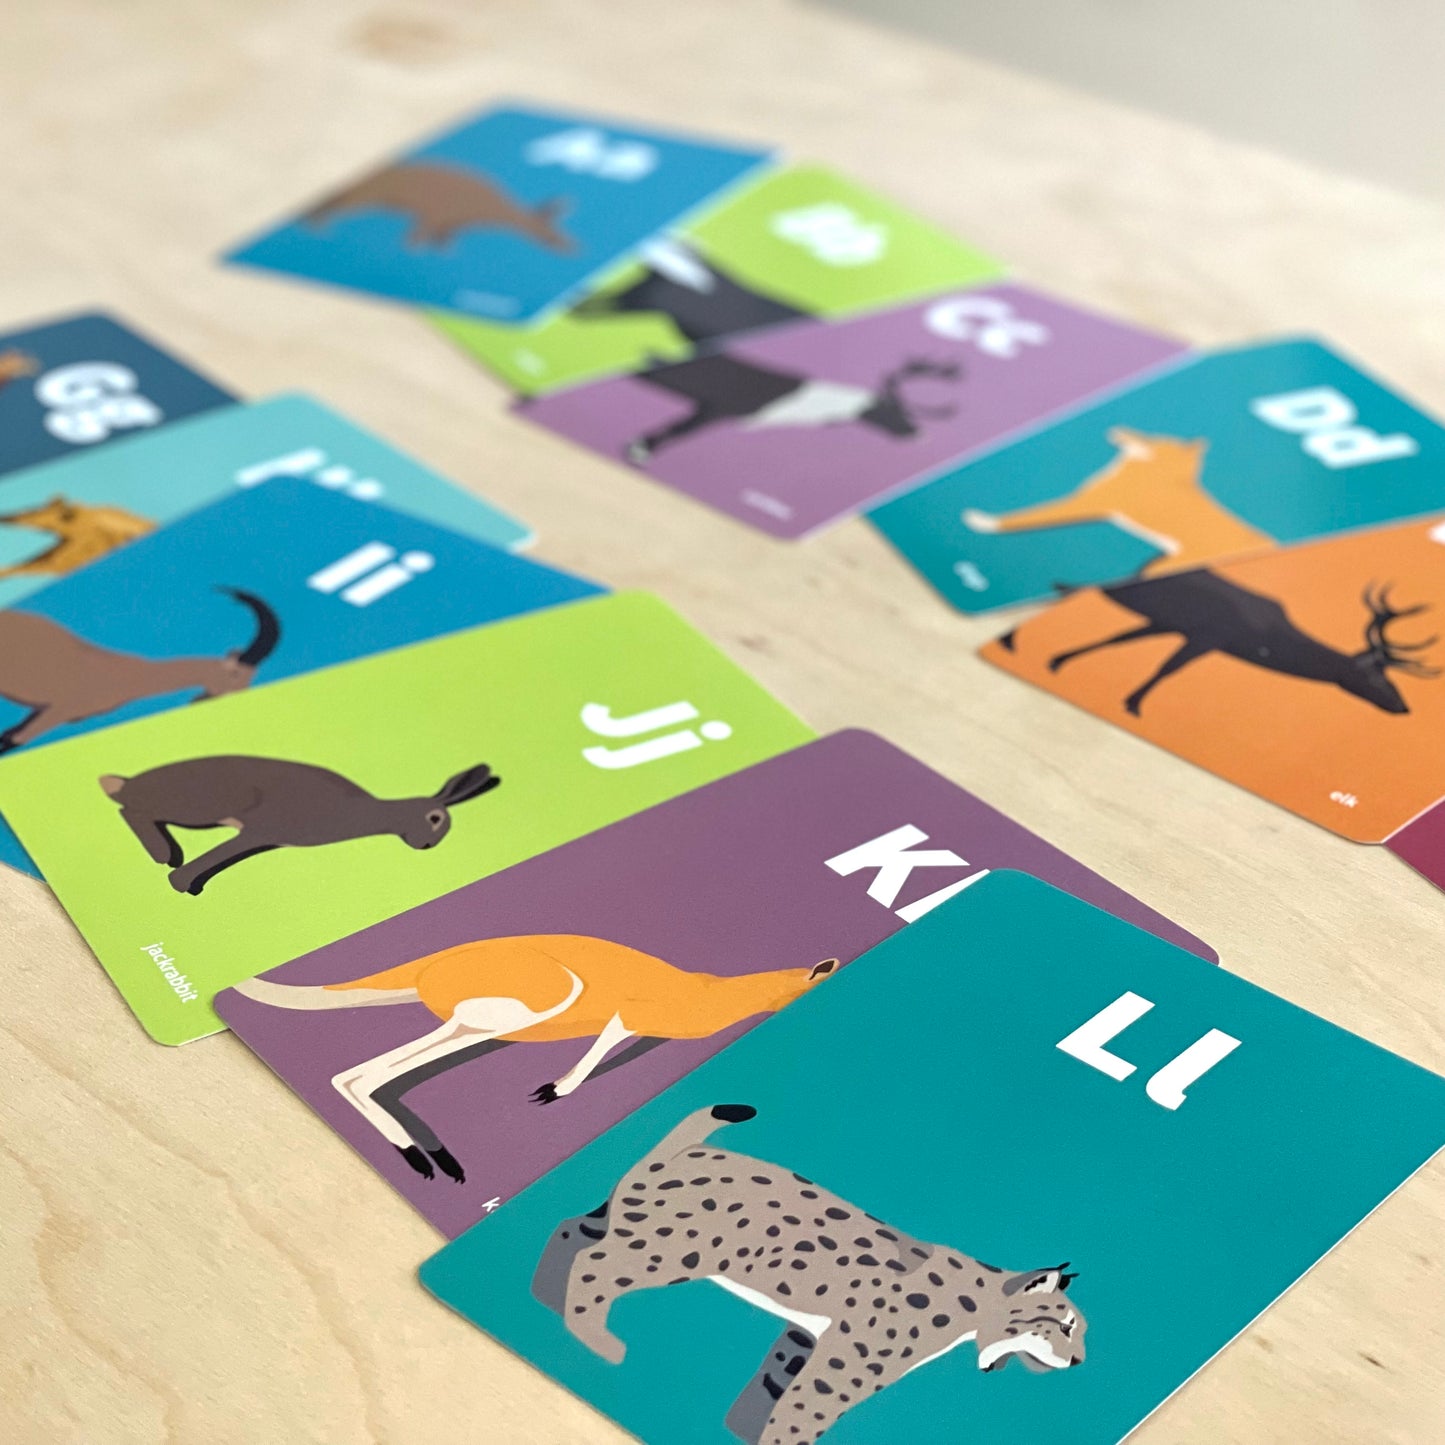 Animal Alphabet Flash Cards - Mammals